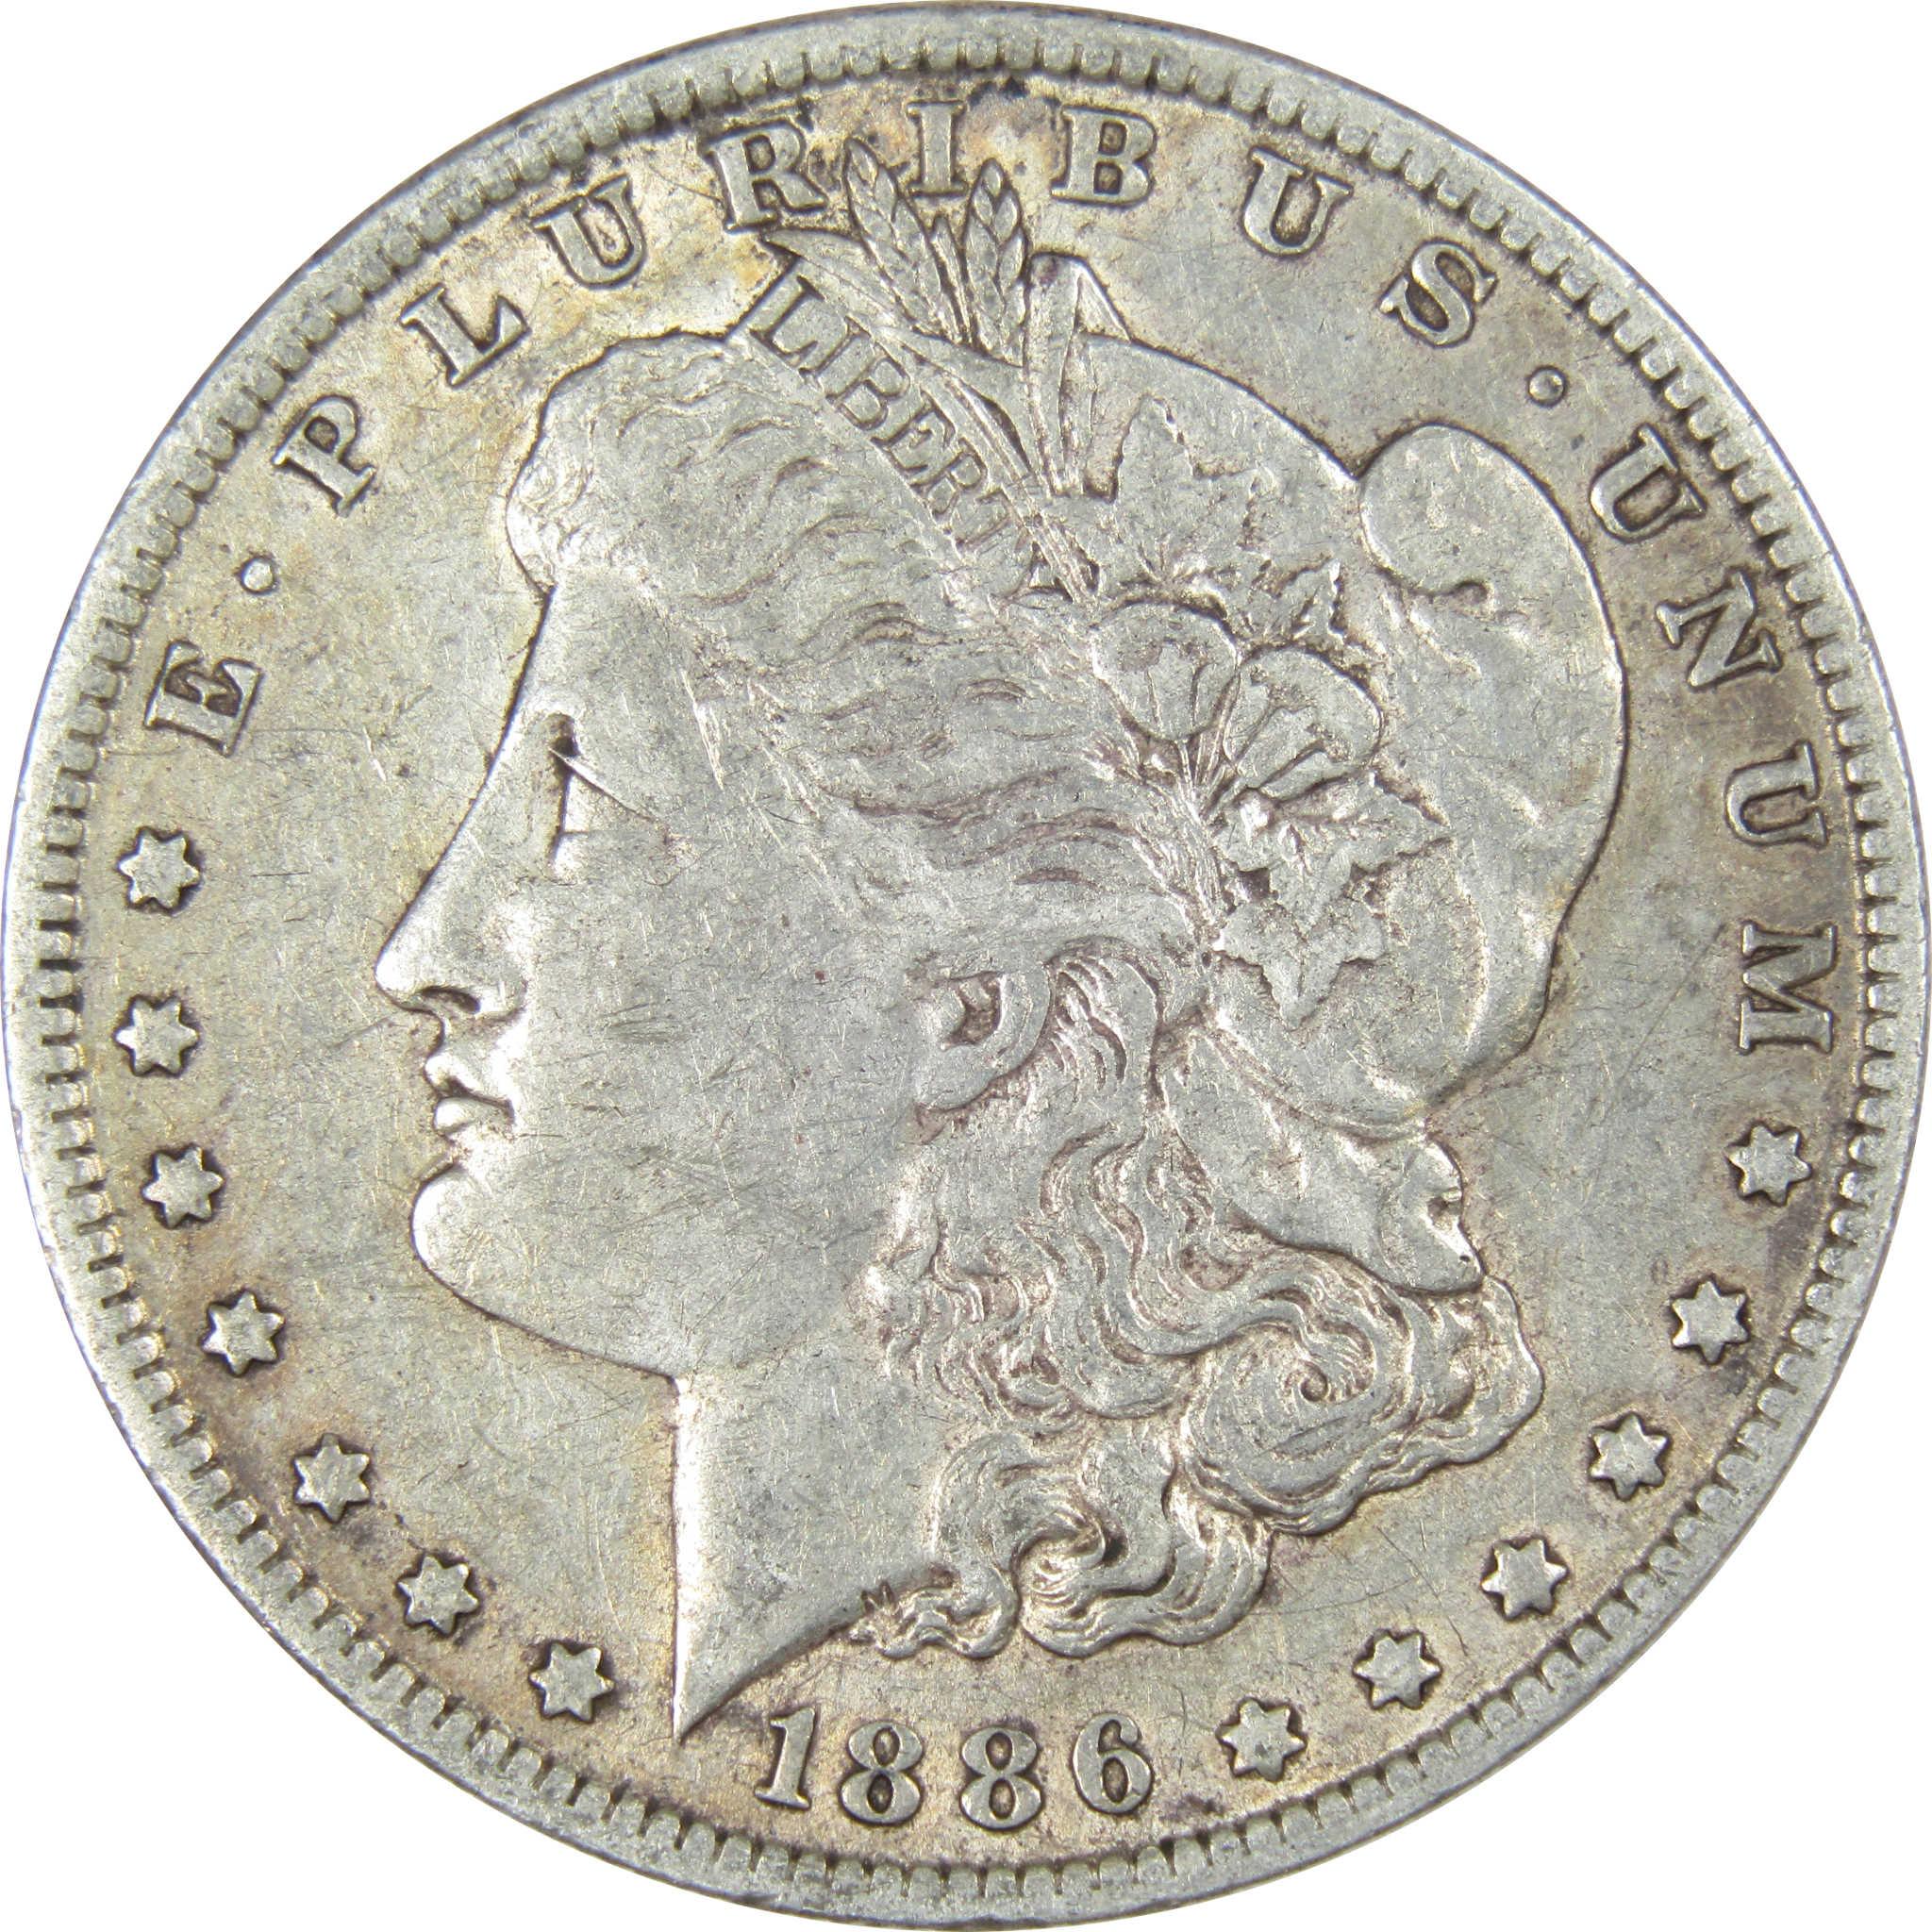 1886 O Morgan Dollar XF EF Extremely Fine 90% Silver $1 US Coin Collectible - Morgan coin - Morgan silver dollar - Morgan silver dollar for sale - Profile Coins &amp; Collectibles